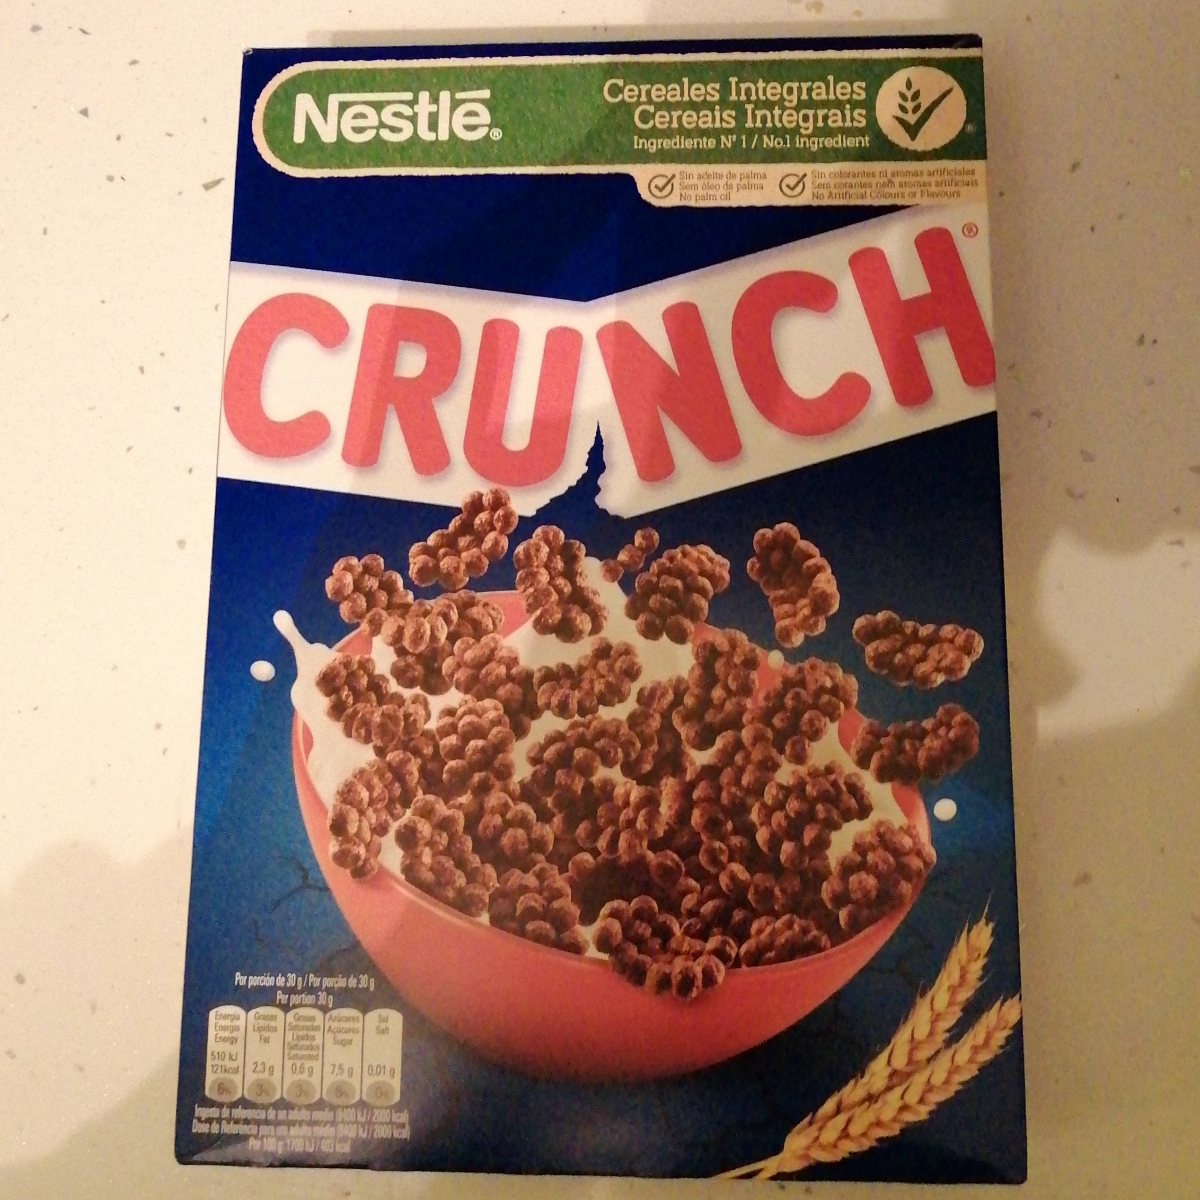 Nestlé Crunch Cereales Integrales 375g. Reviews